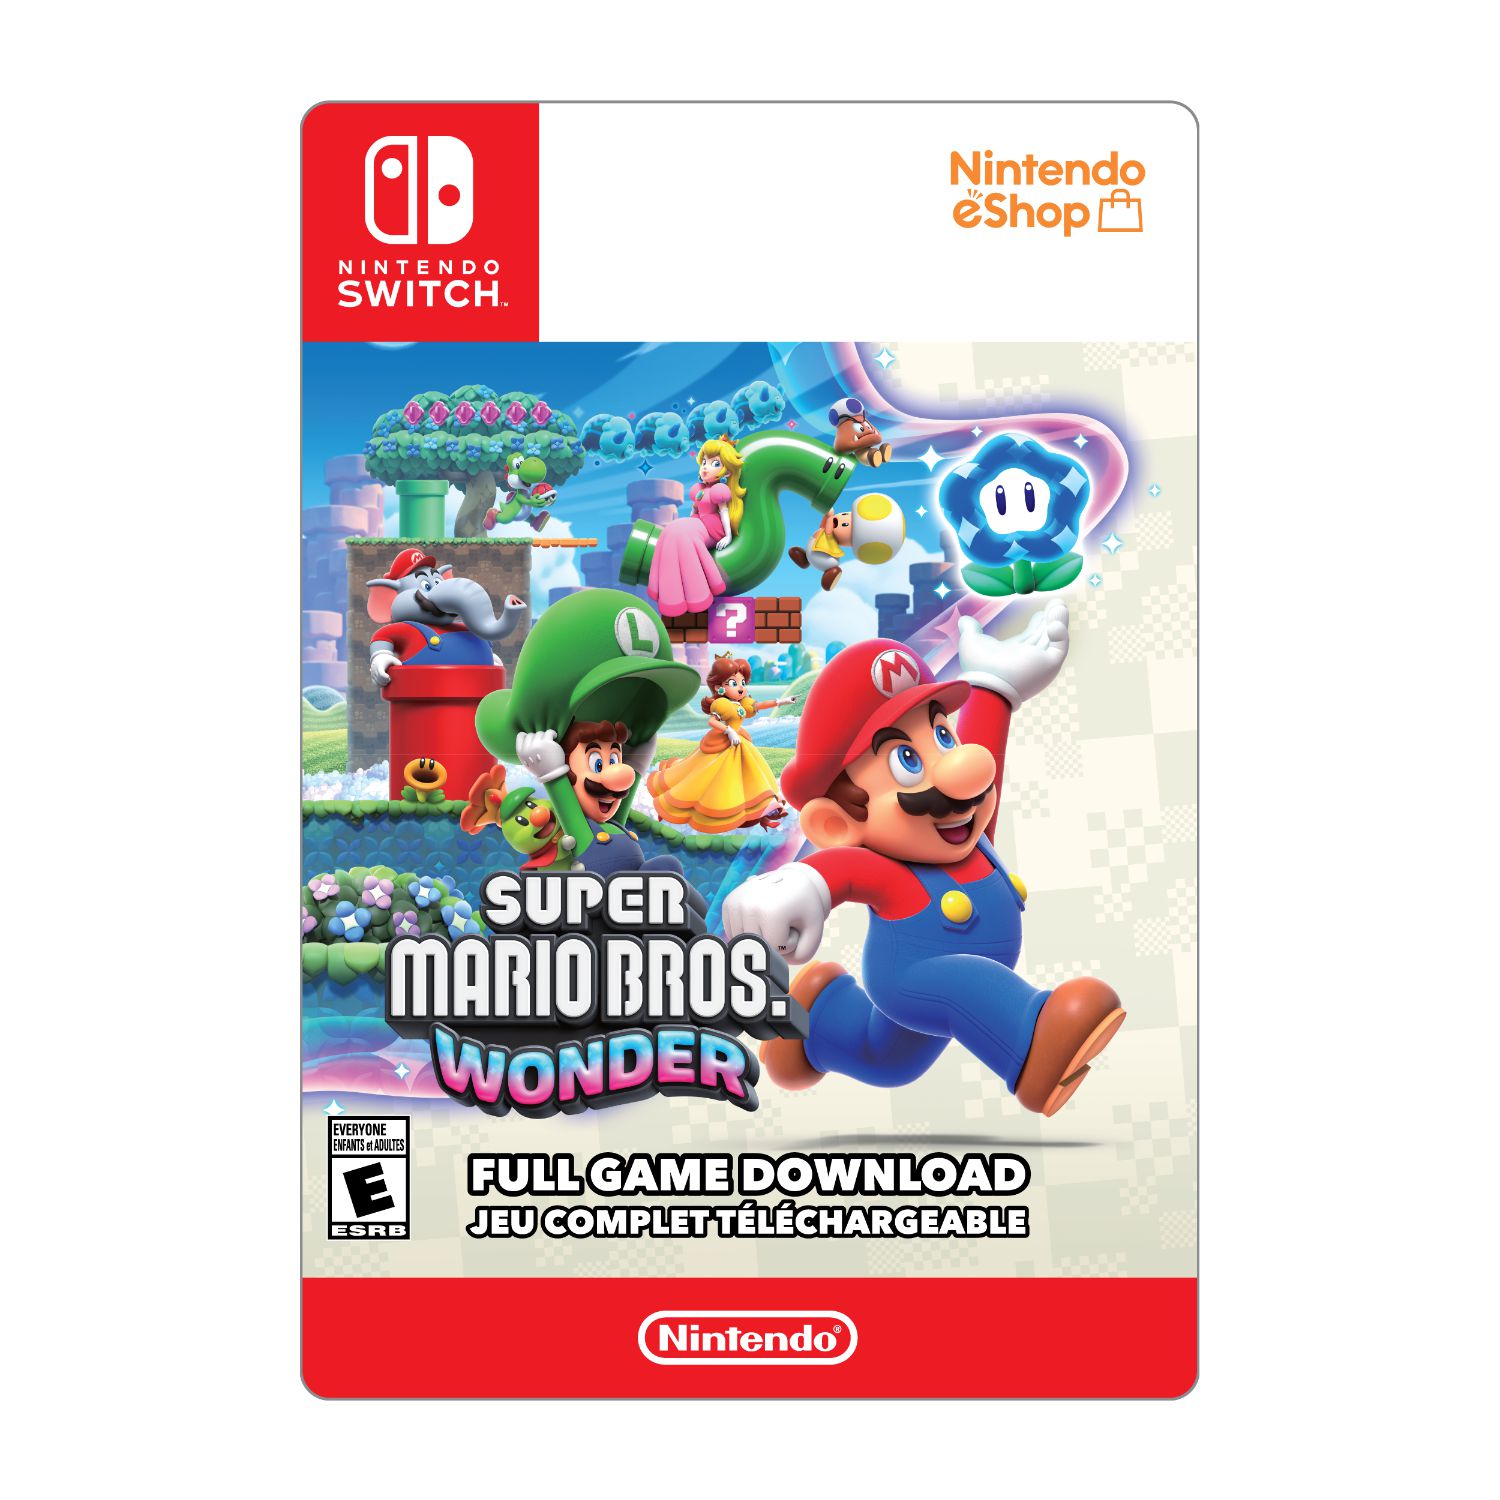 Nintendo Switch Super Mario Bros. Wonder $79.99 (Digital Code